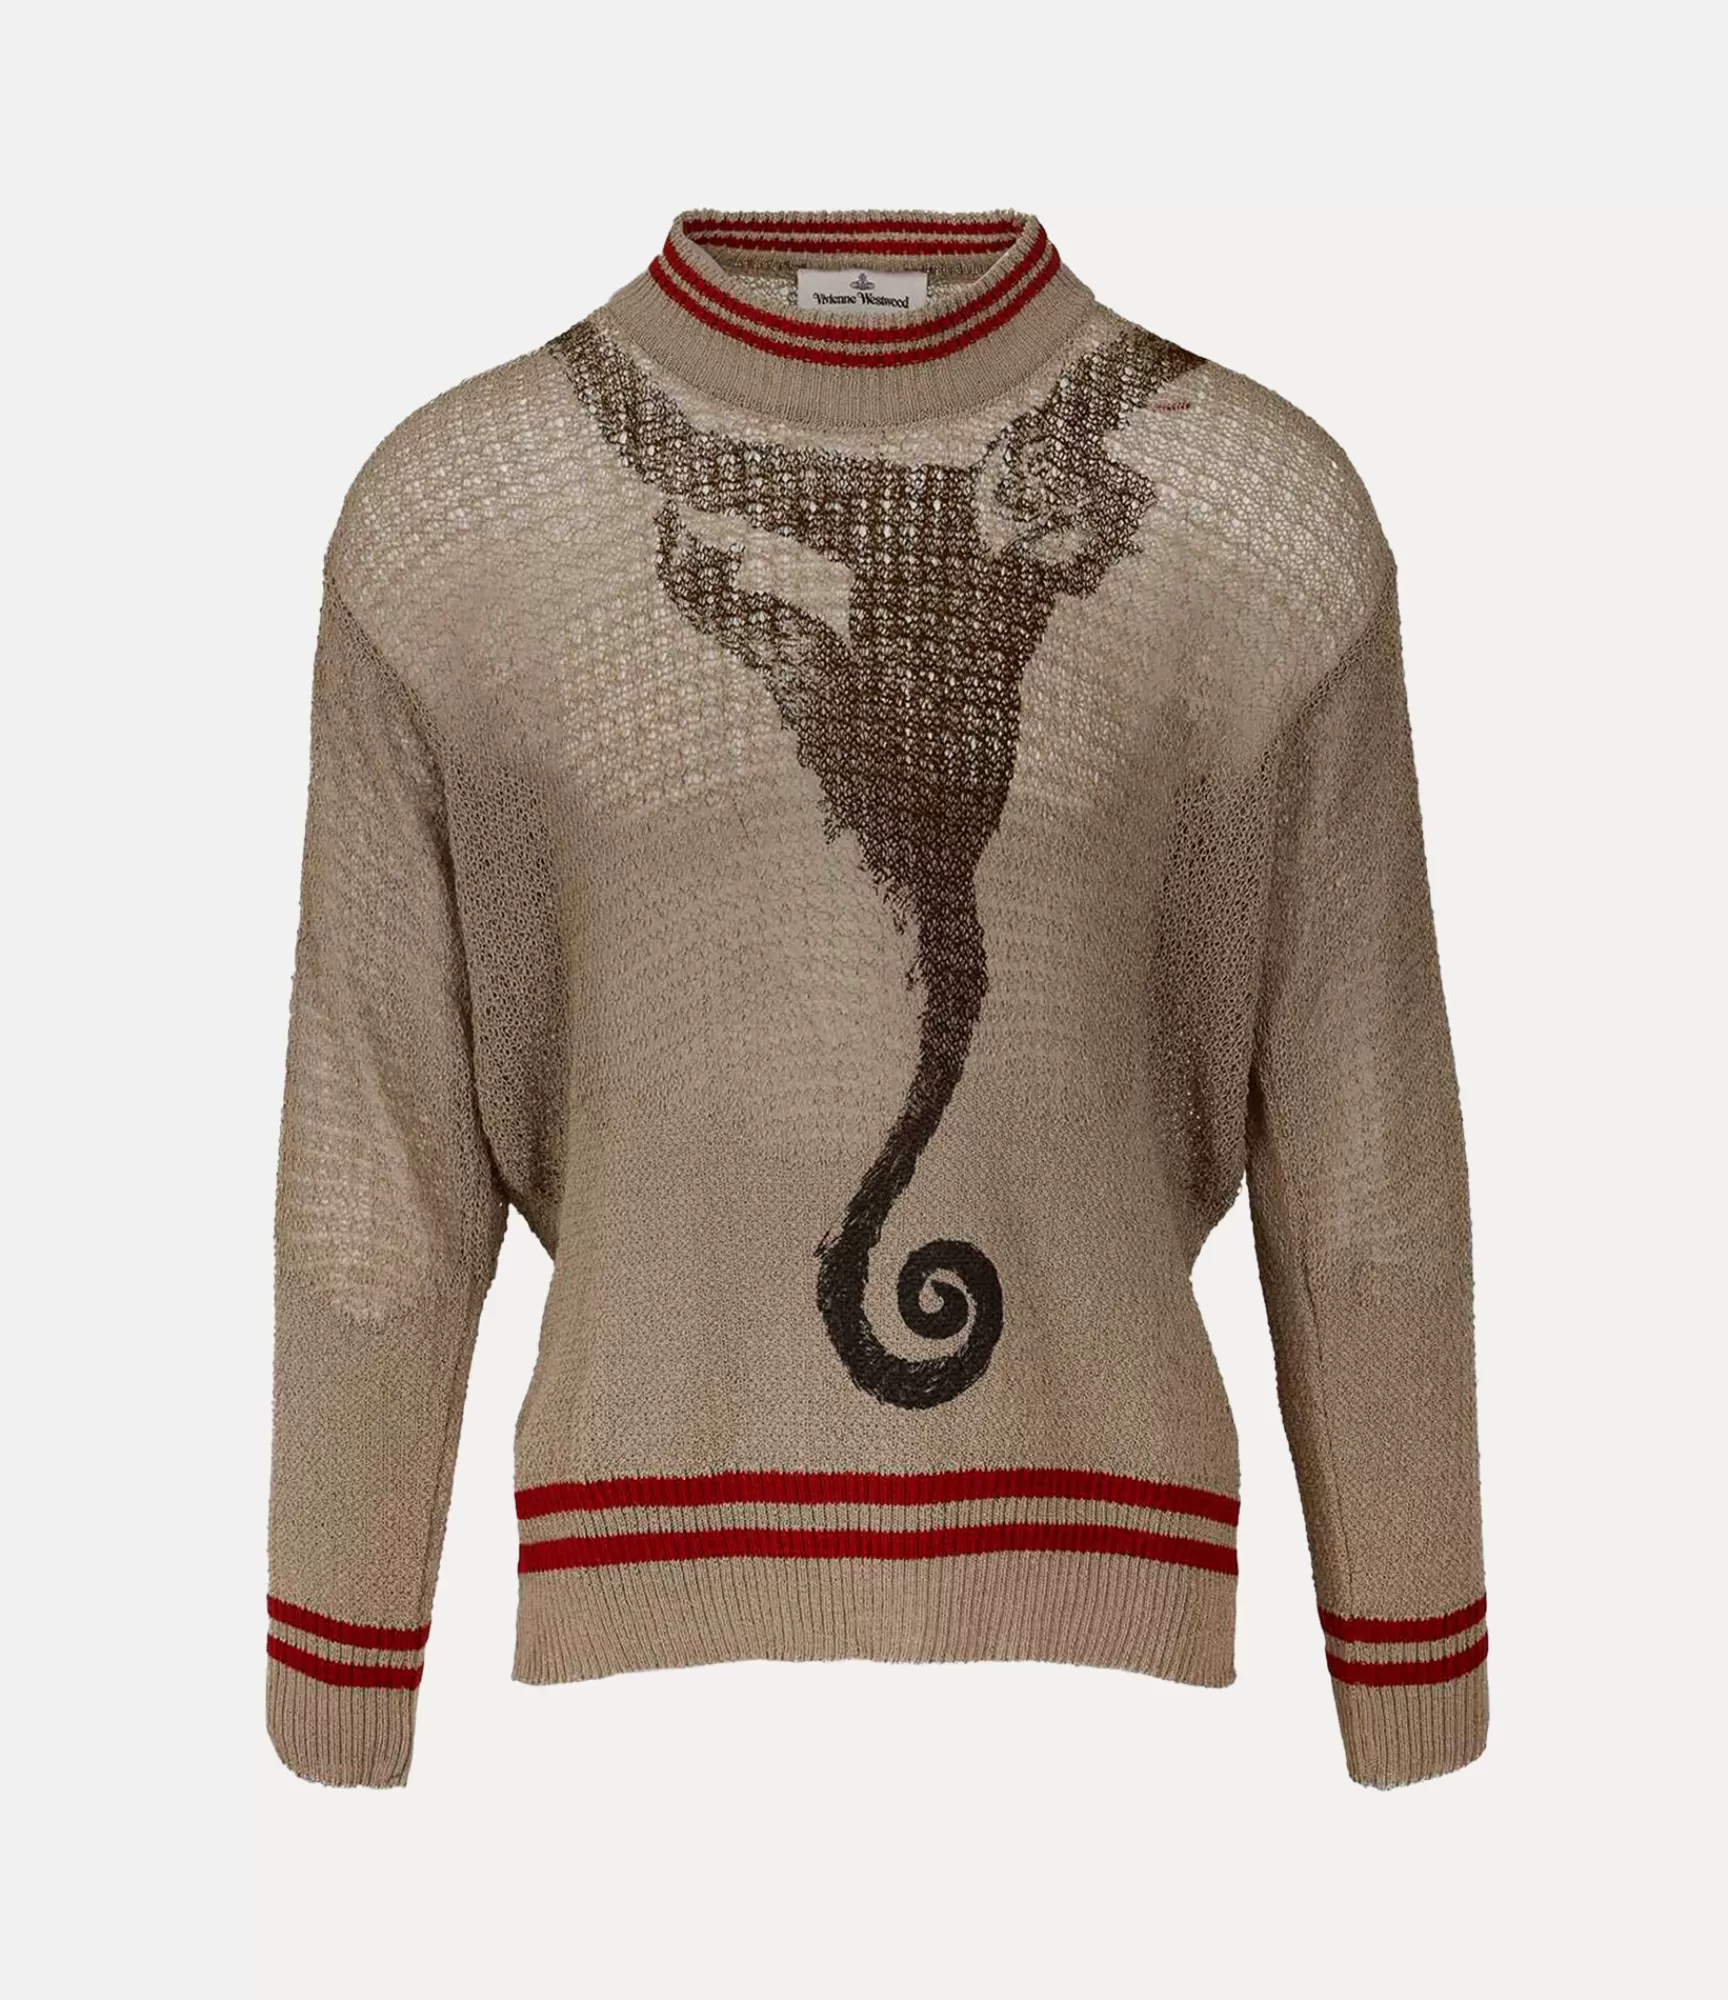 Vivienne Westwood Knitwear and Sweatshirts*Distressed jumper Taupe